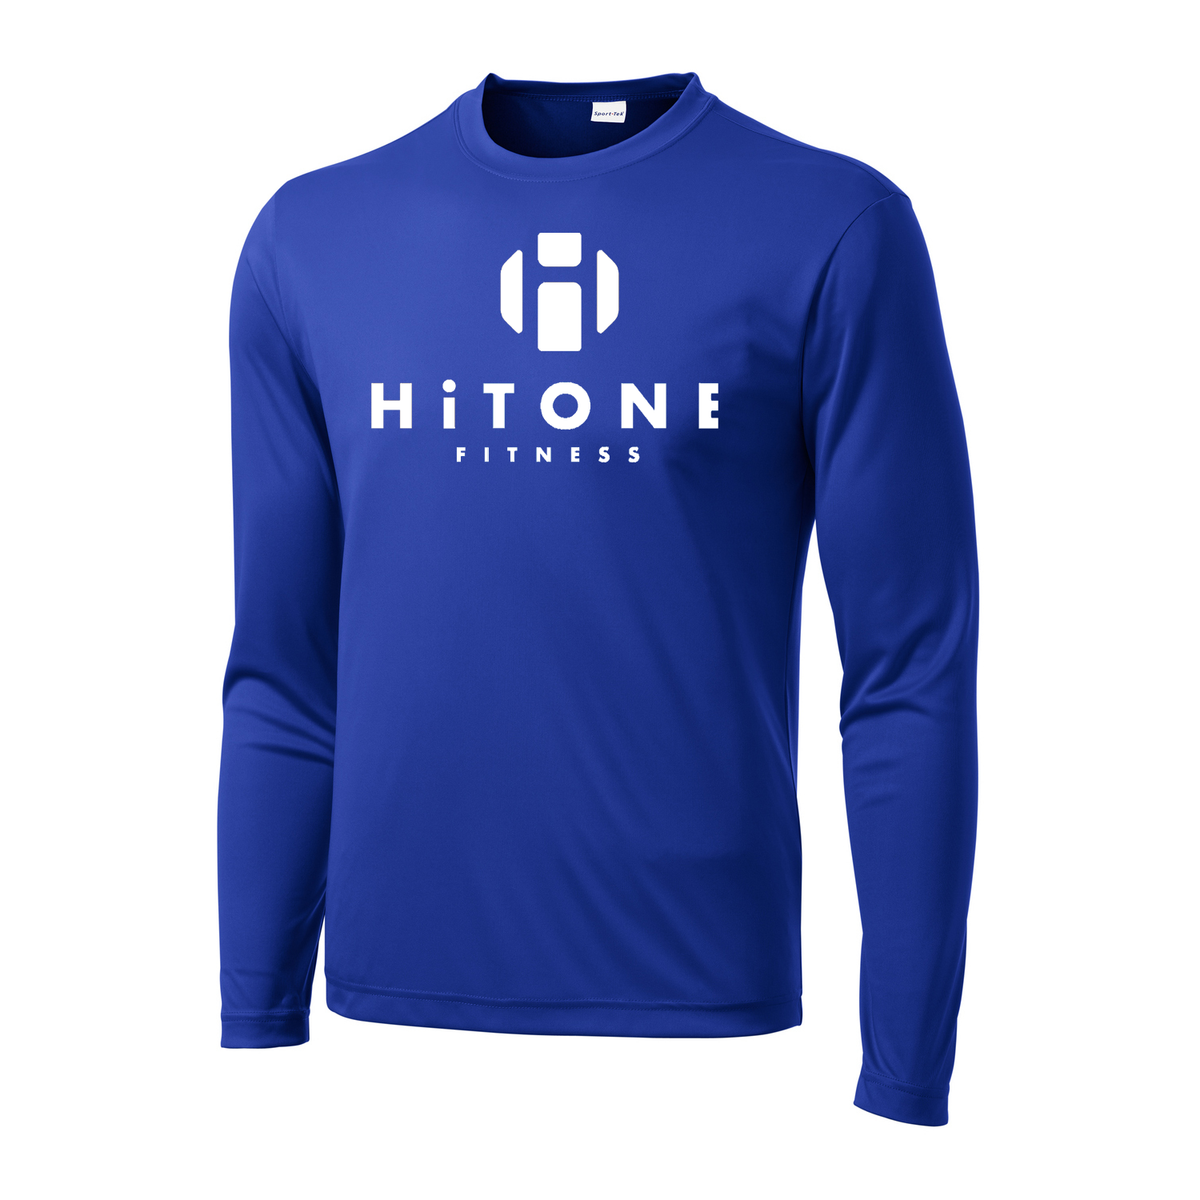 HiTONE Fitness Long Sleeve Performance Shirt